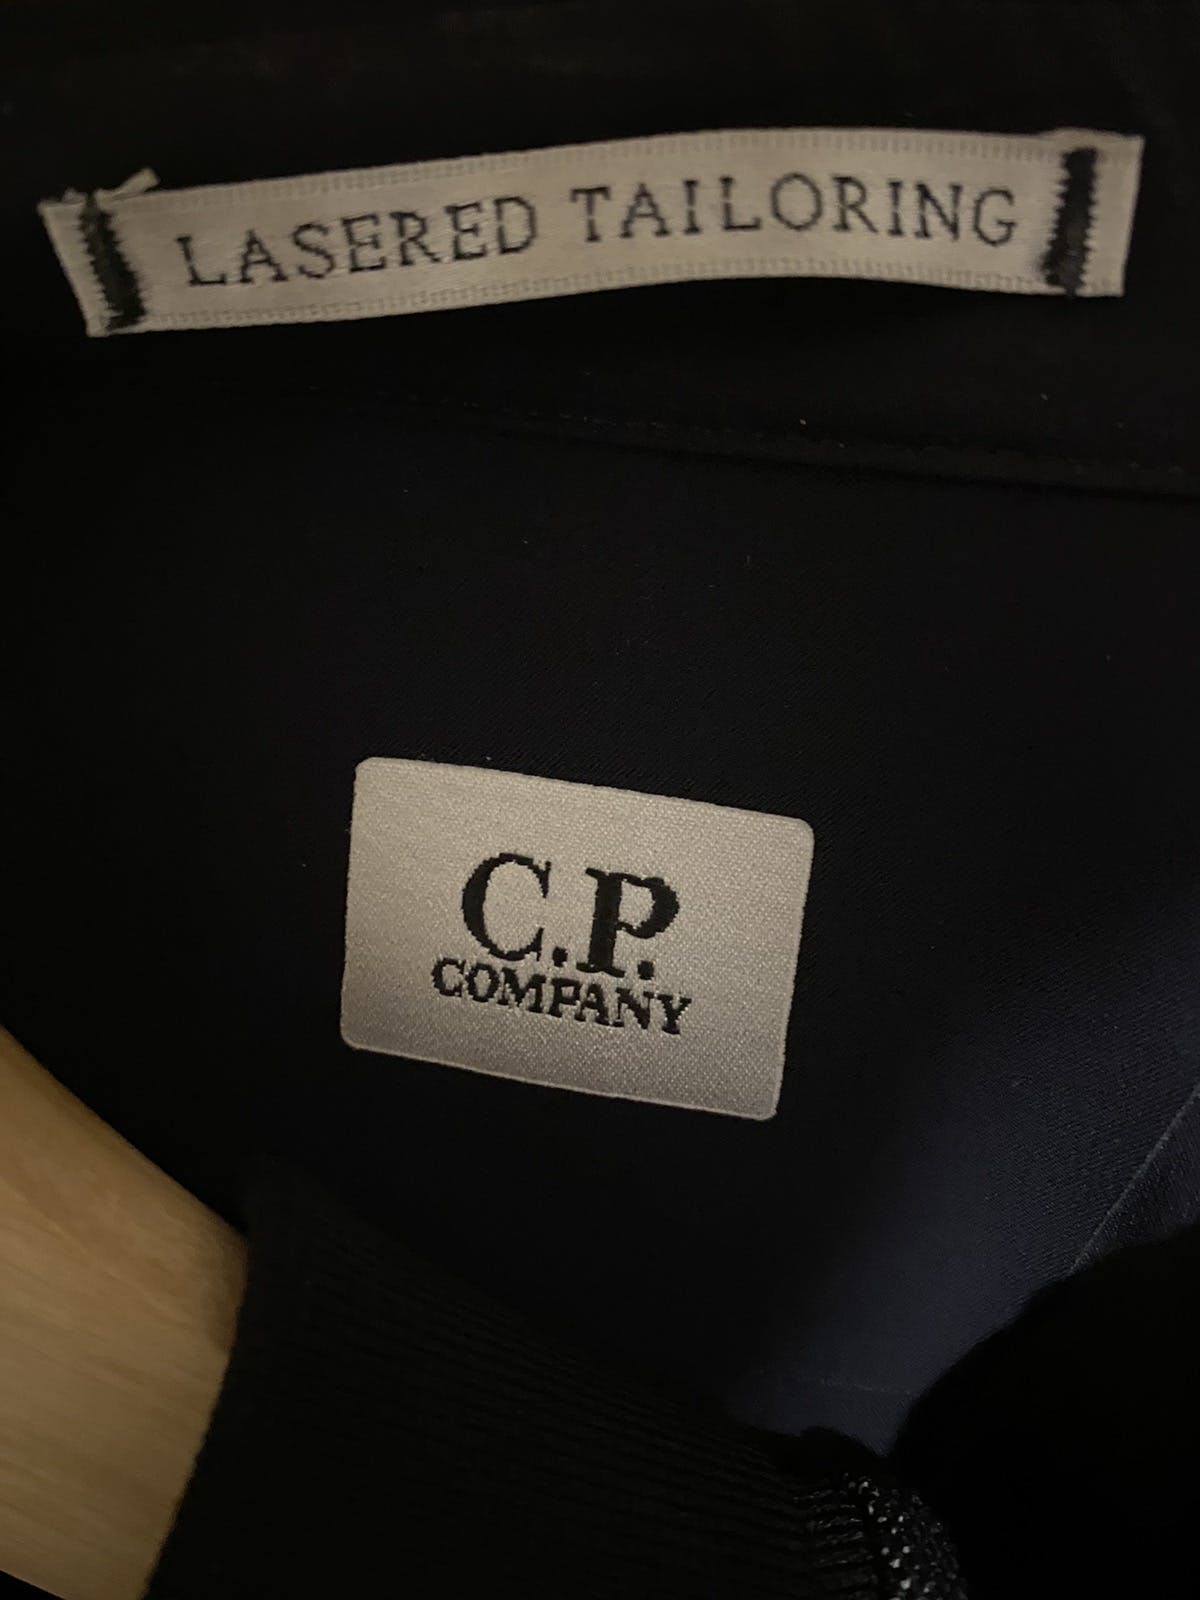 C.P. Company P-Lastic Laser-Cut Suit - 11